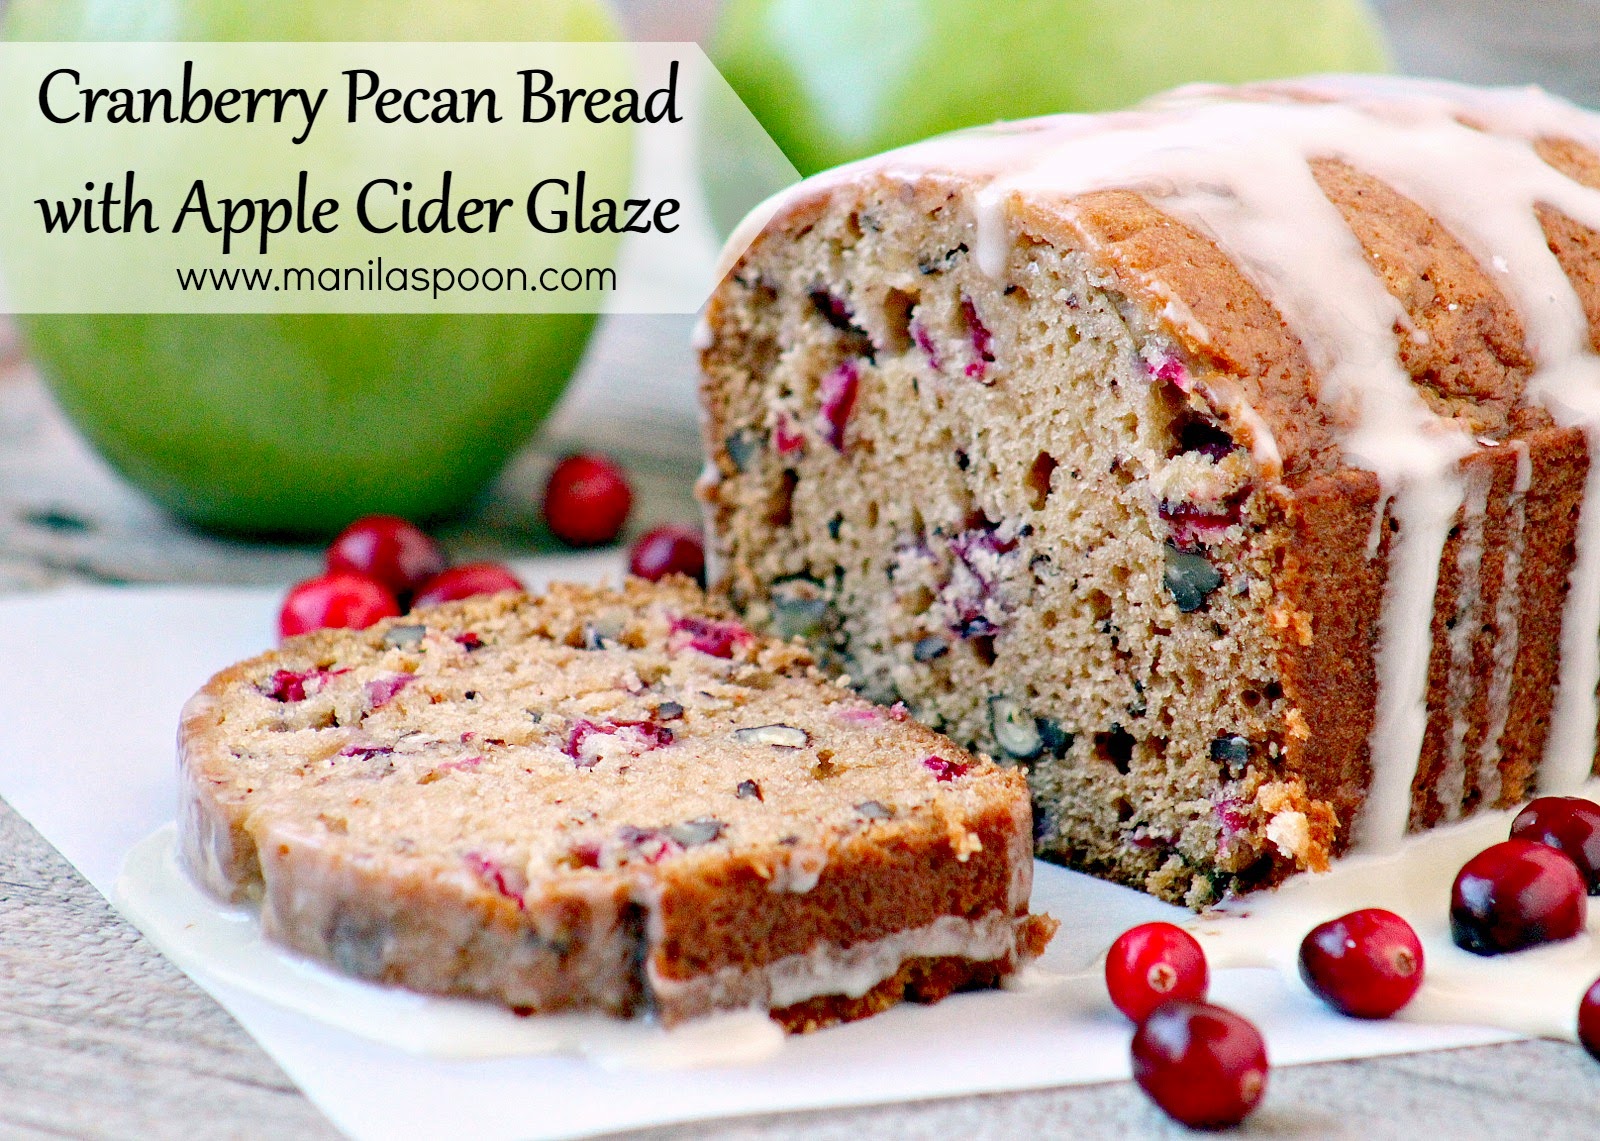 Cranberry Pecan Bread with Apple Cider Glaze